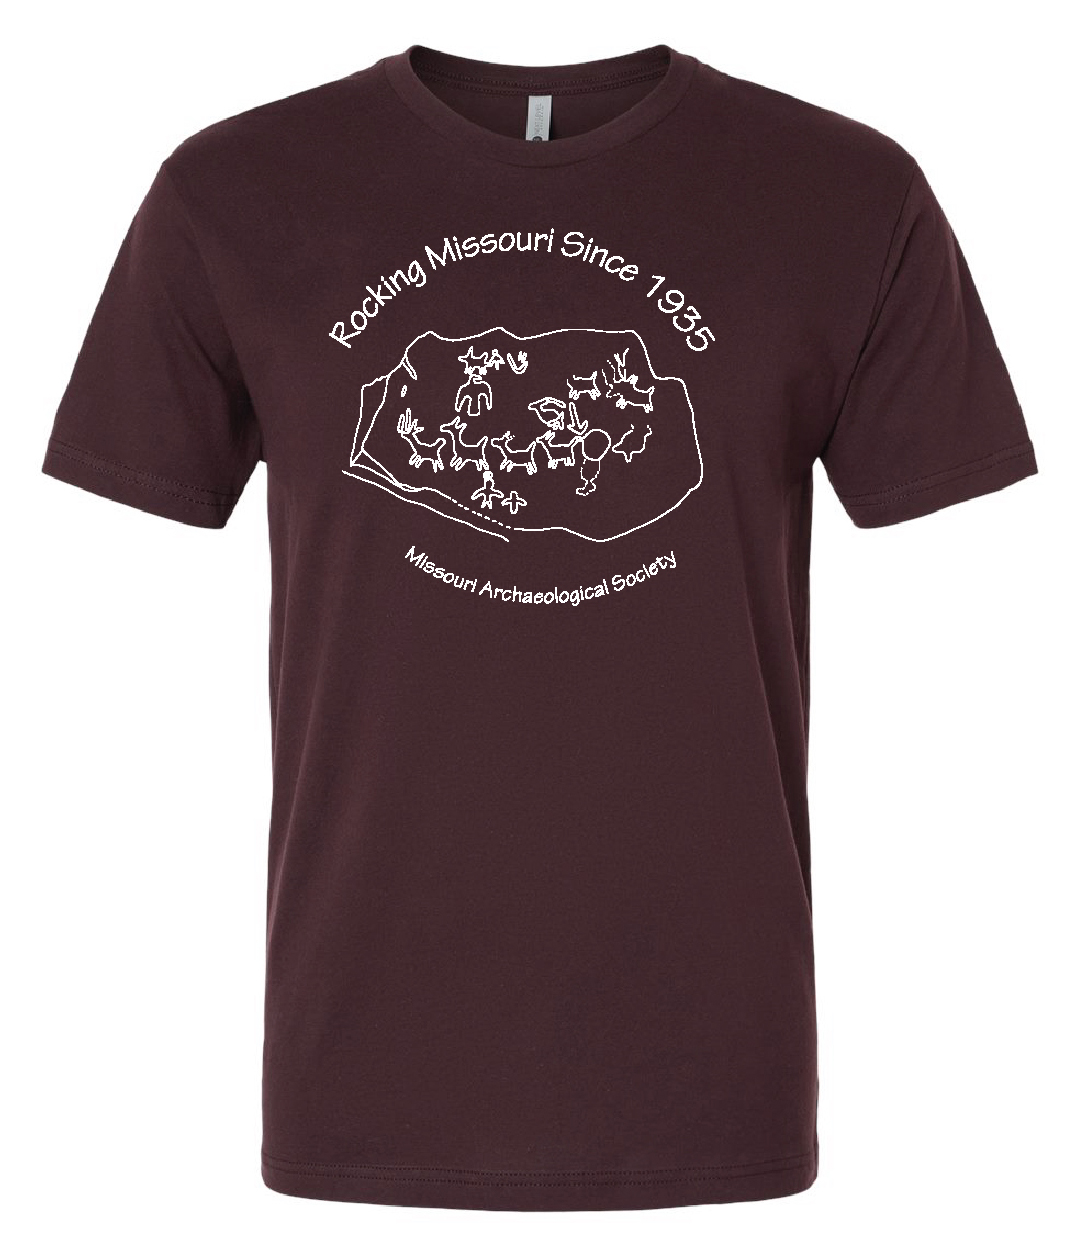 Rocking Missouri 1935 T-Shirt - Missouri Archaeological Society